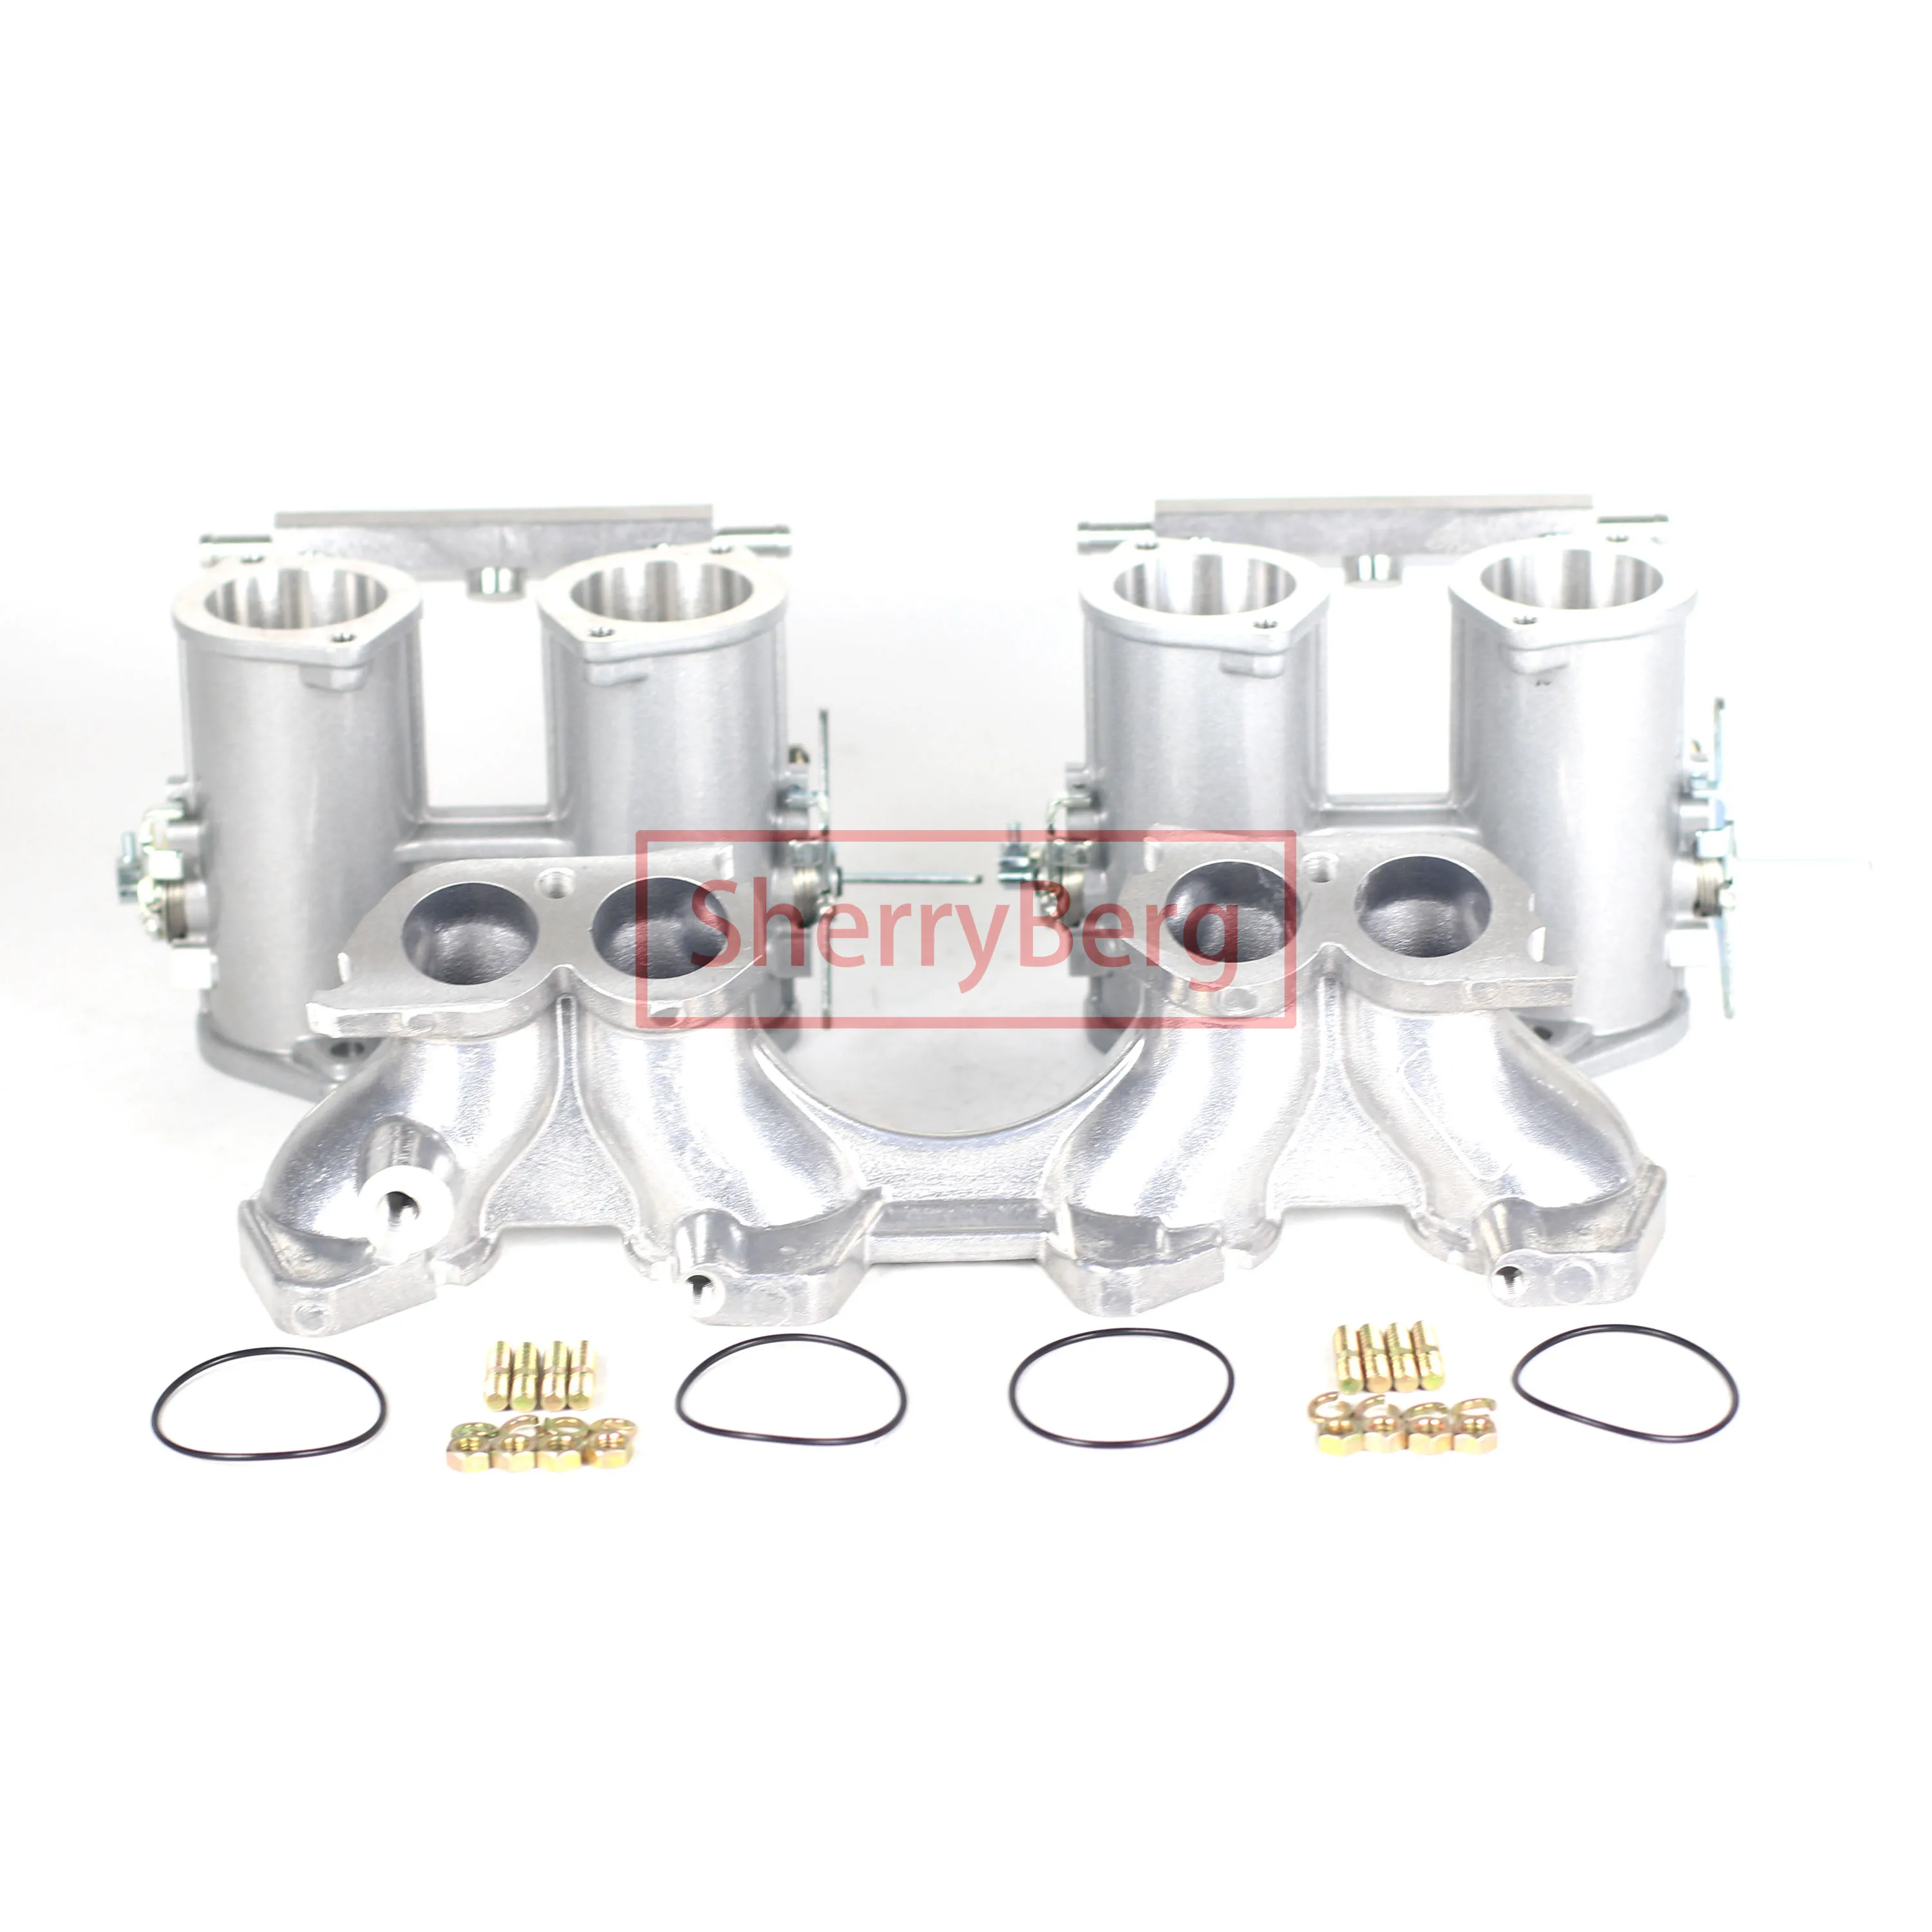 

SherryBerg 2TBS 40/42/45/48/50mm Twin Throttle Bodies Manifold for Toyota 3K 4K 5K Weber/Dellorto/Solex DCOE/DHLA Rep Carb